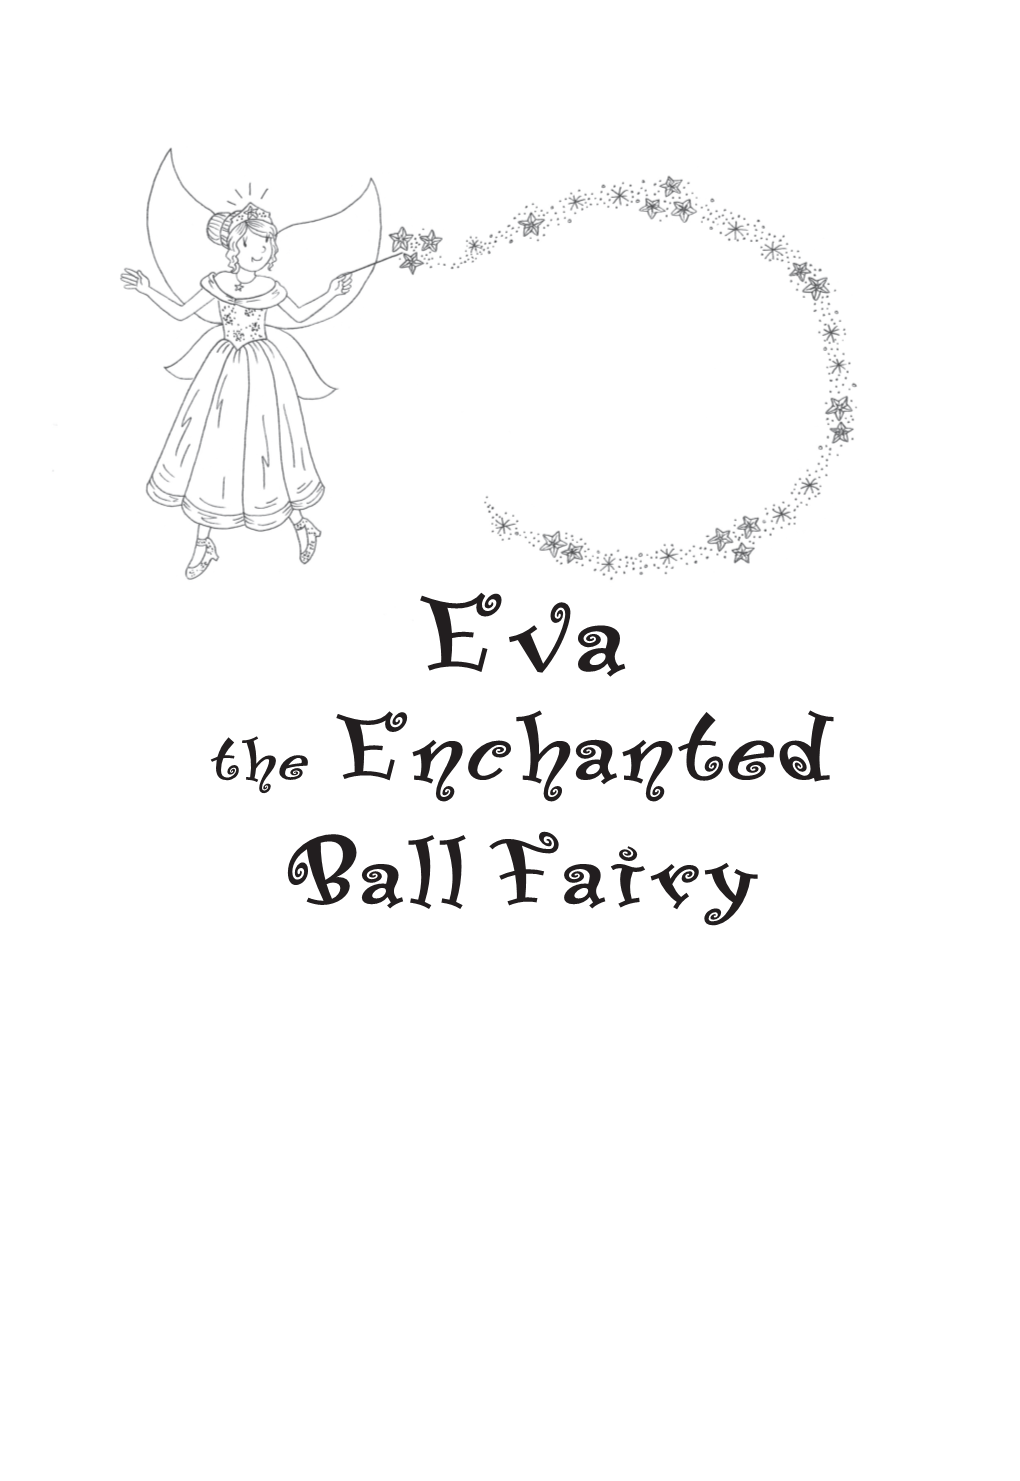 The Enchanted Ball Fairy